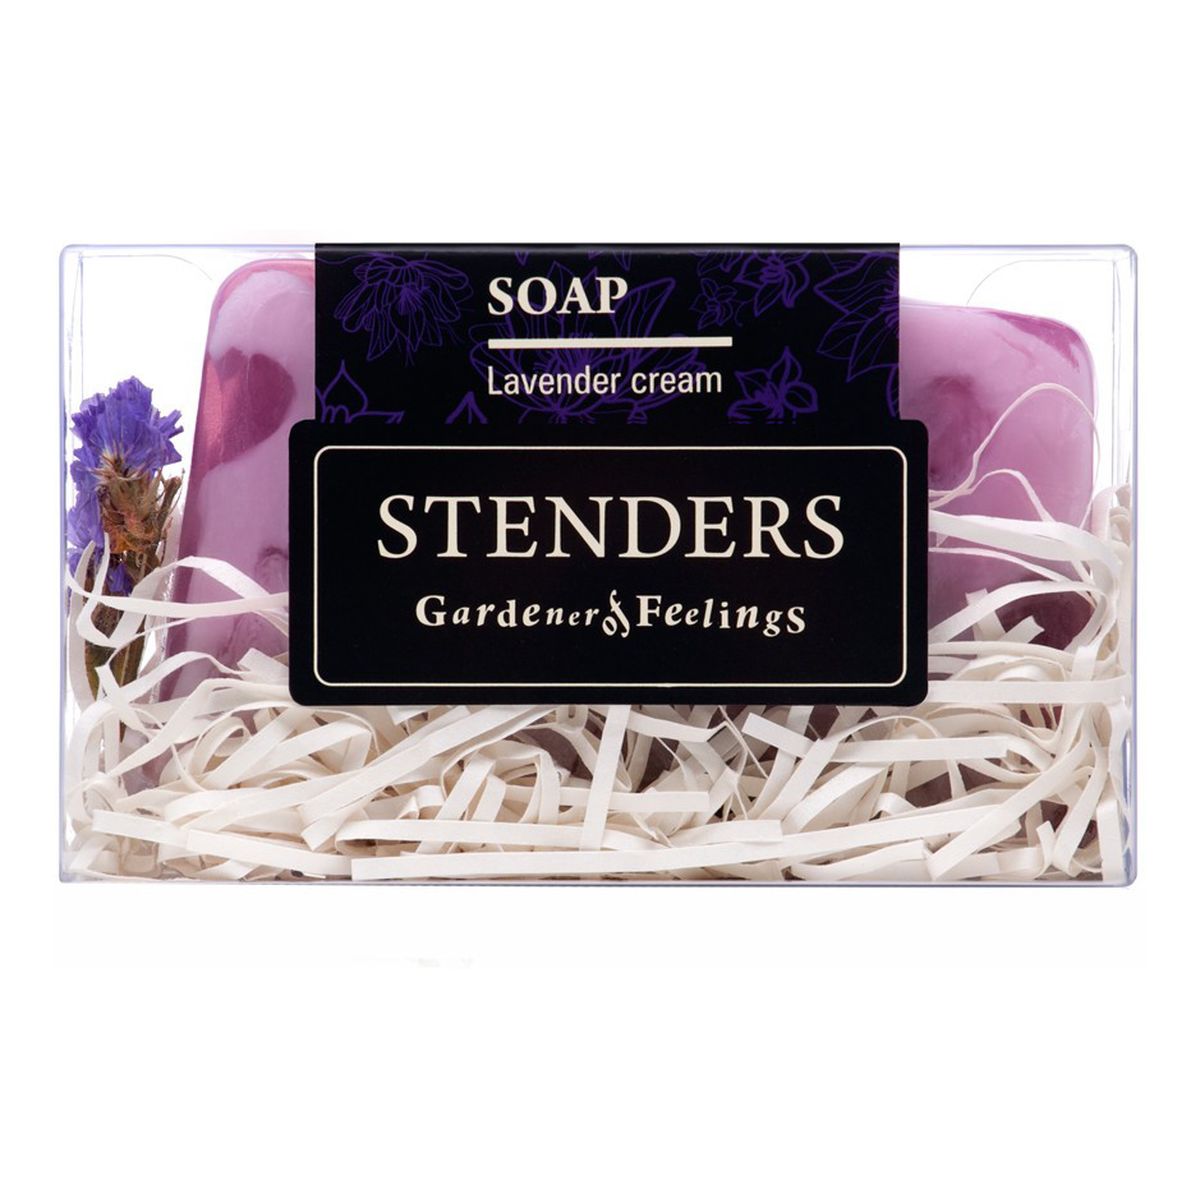 Stenders Cream Soap mydło z kremem Lavender 100g